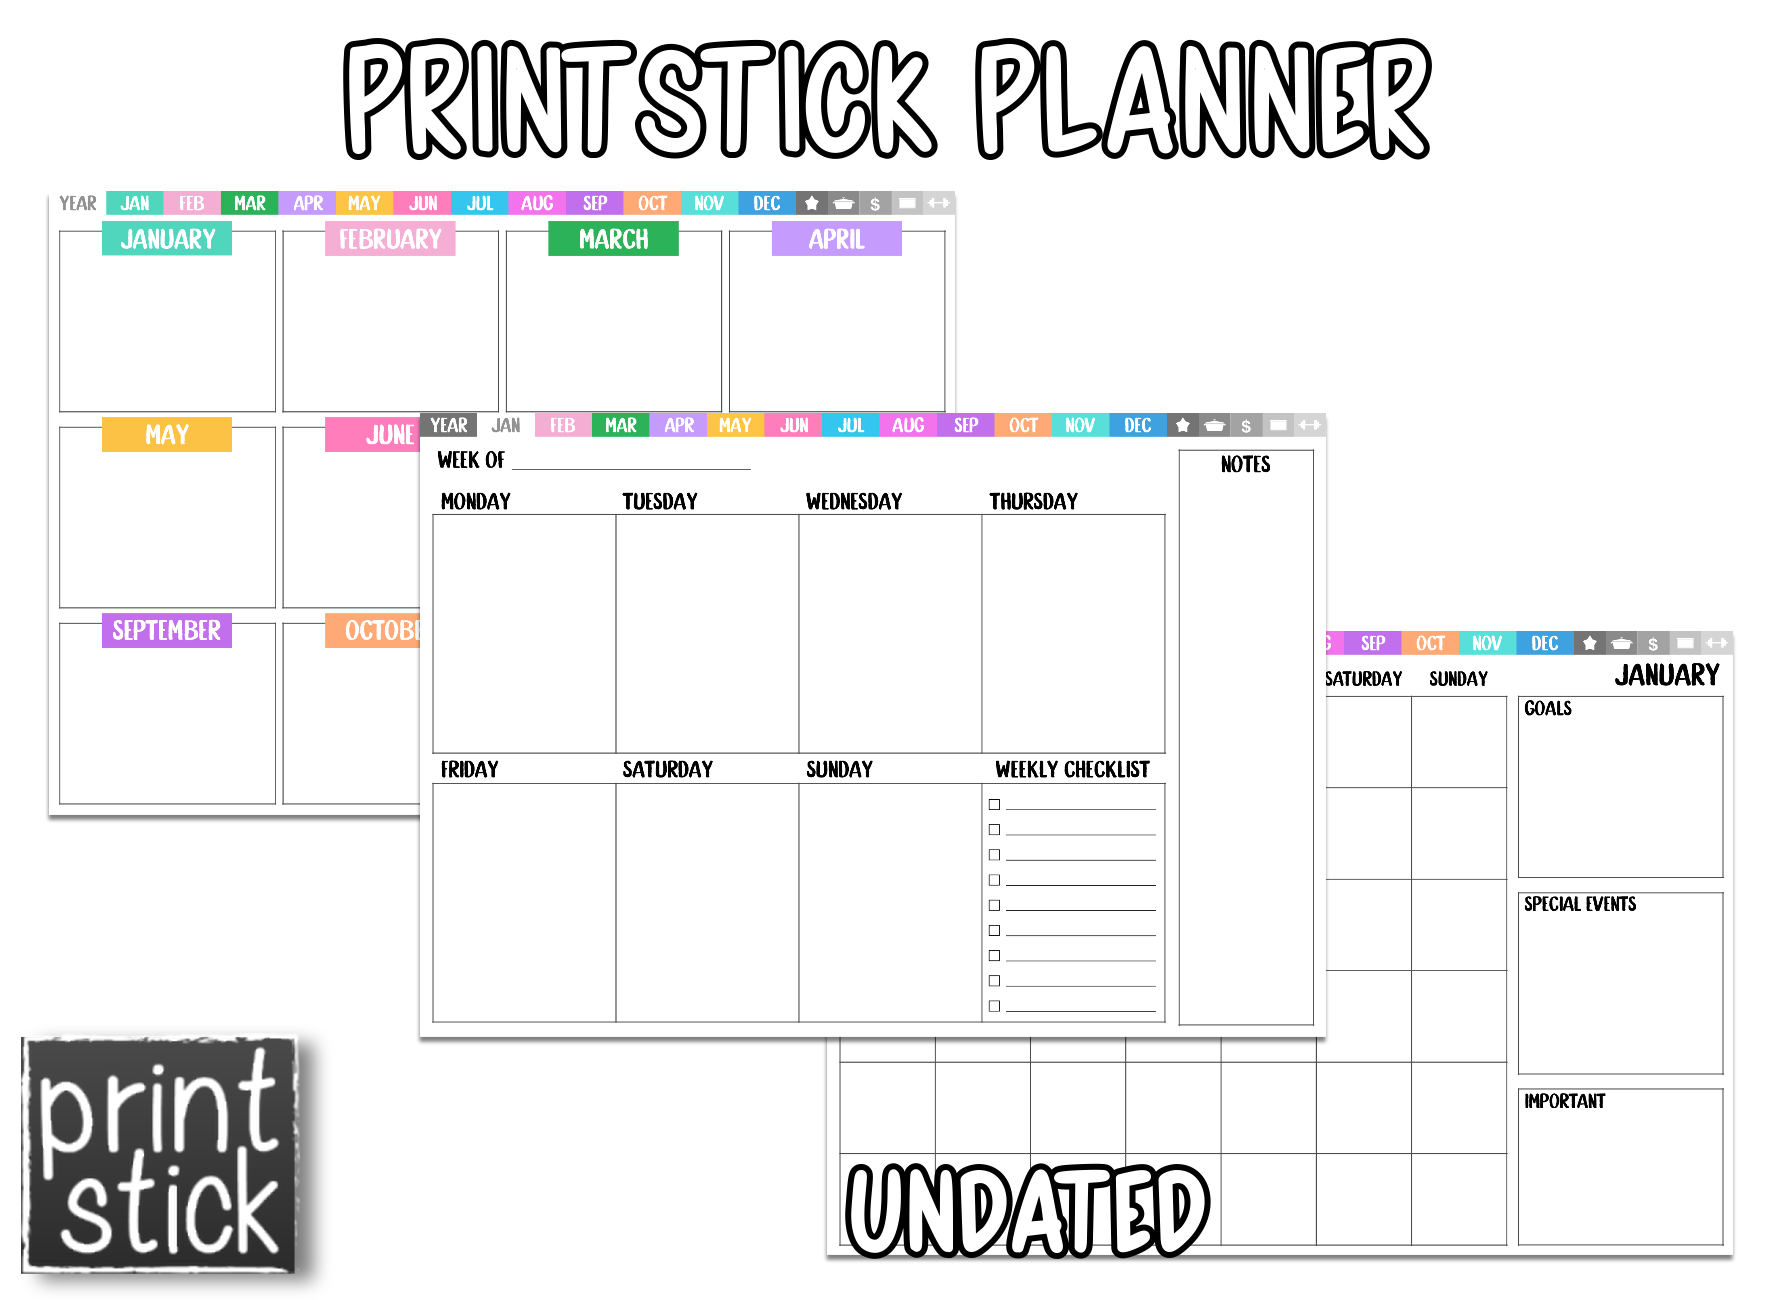 PrintStick Planner - Print Stick